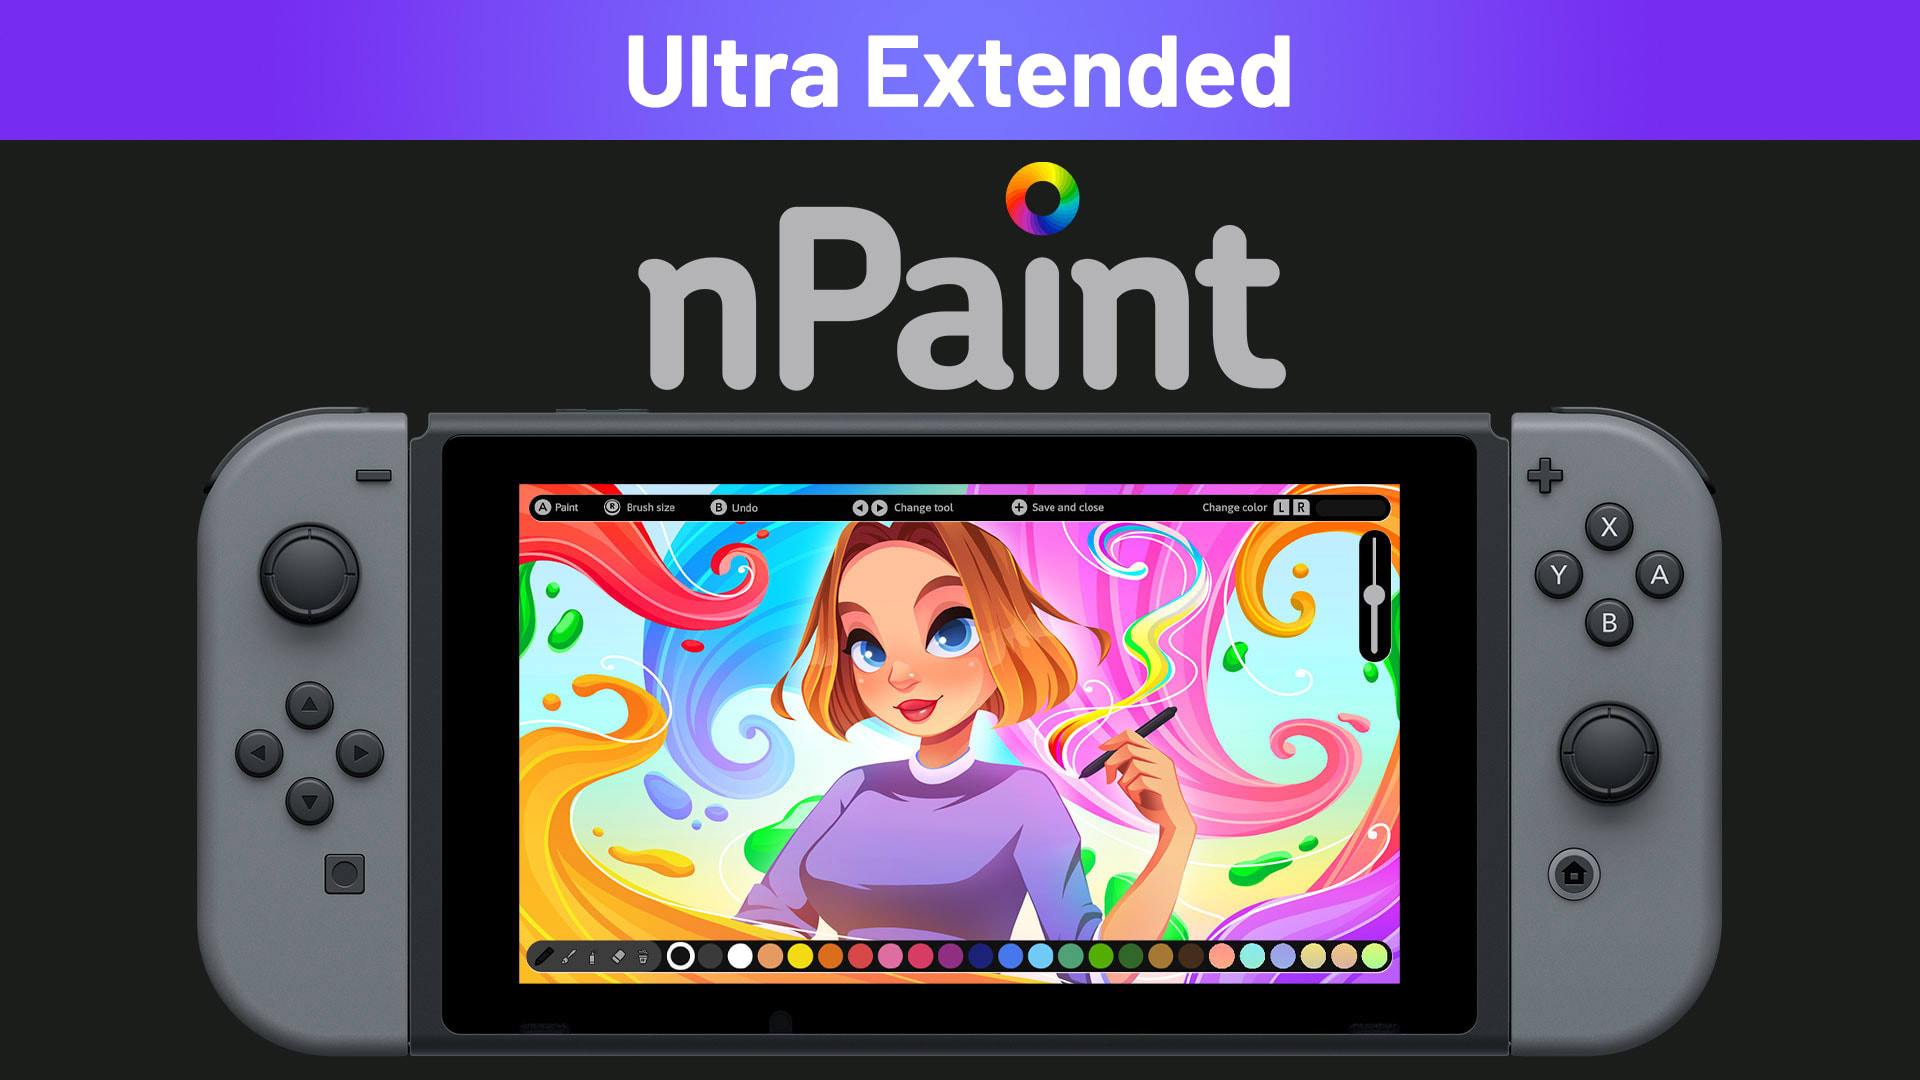 nPaint Ultra Extended